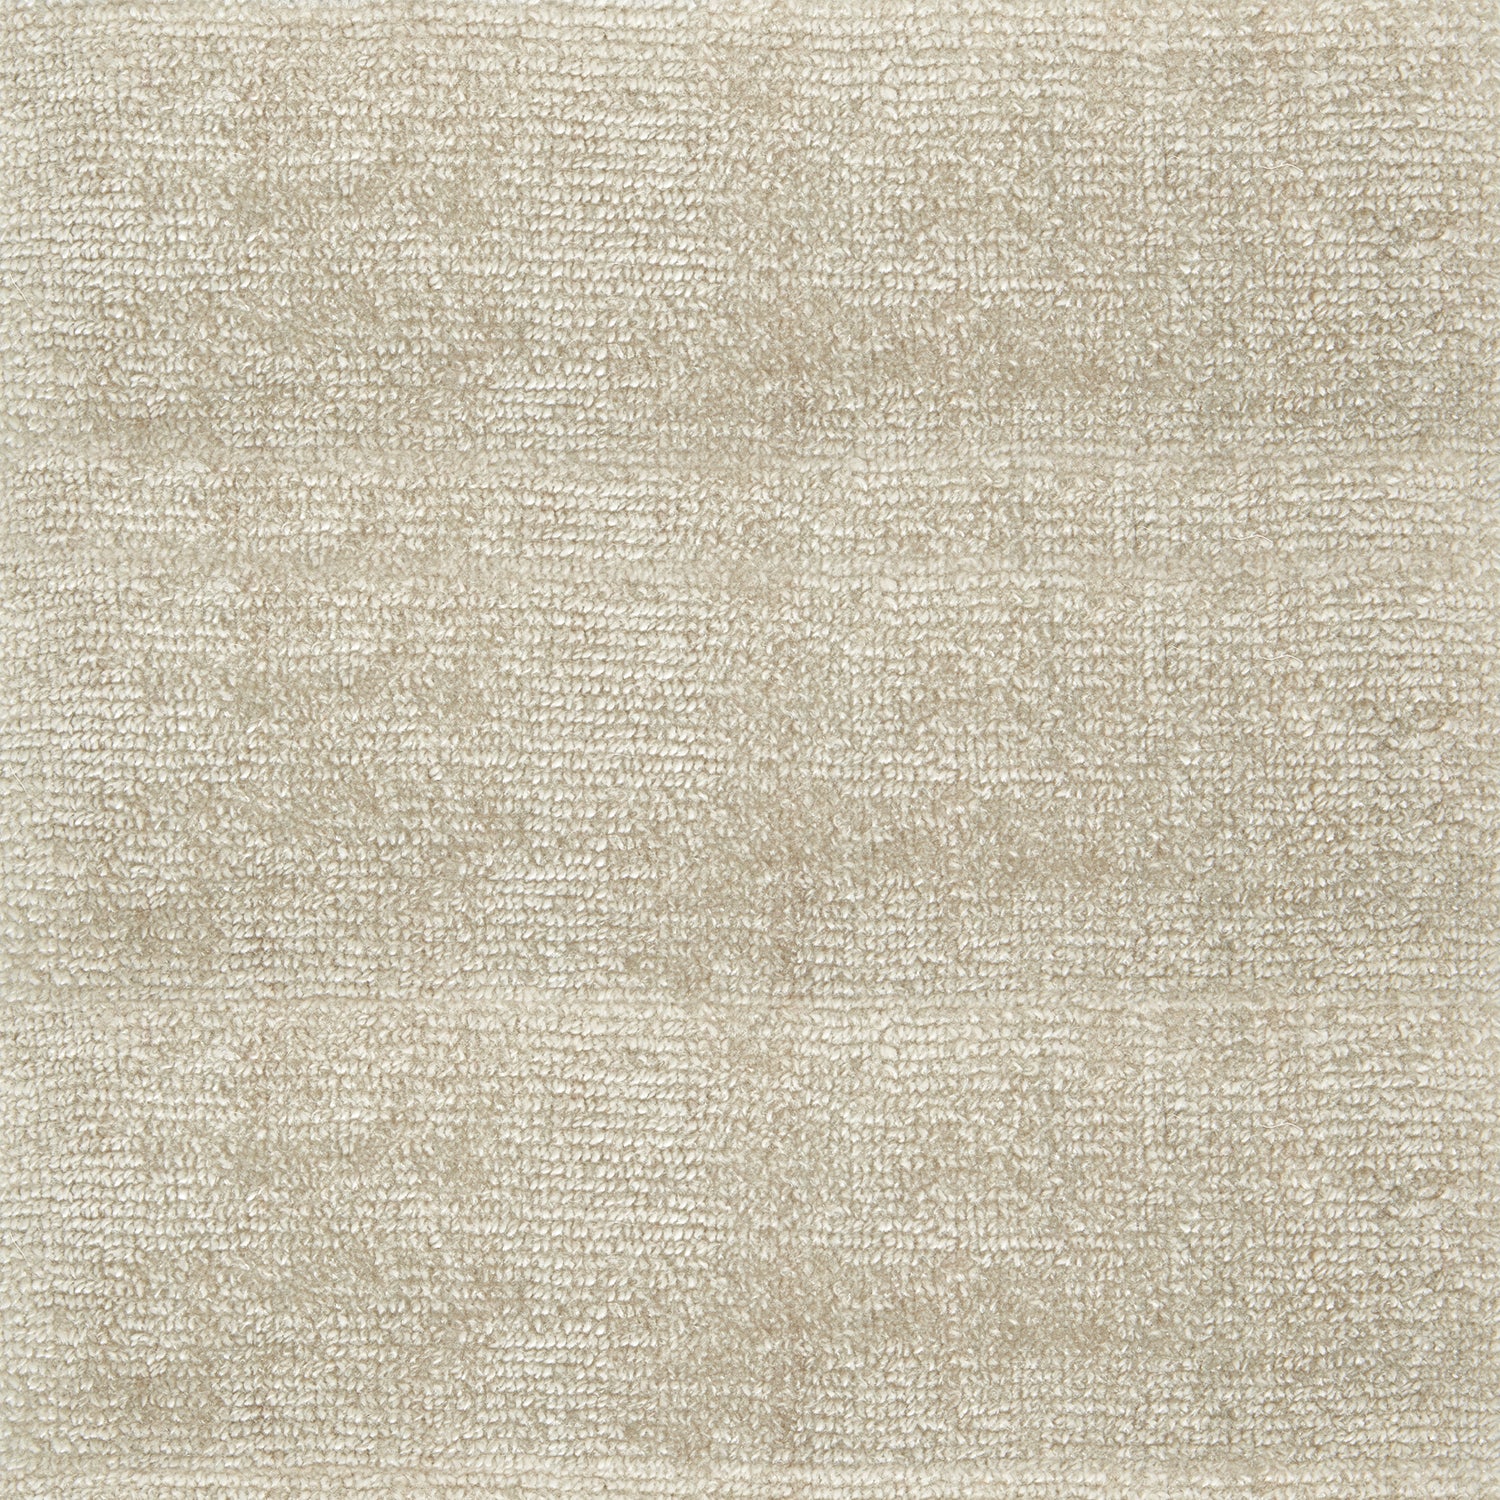 Nylon broadloom carpet swatch in a textured weave in cream.